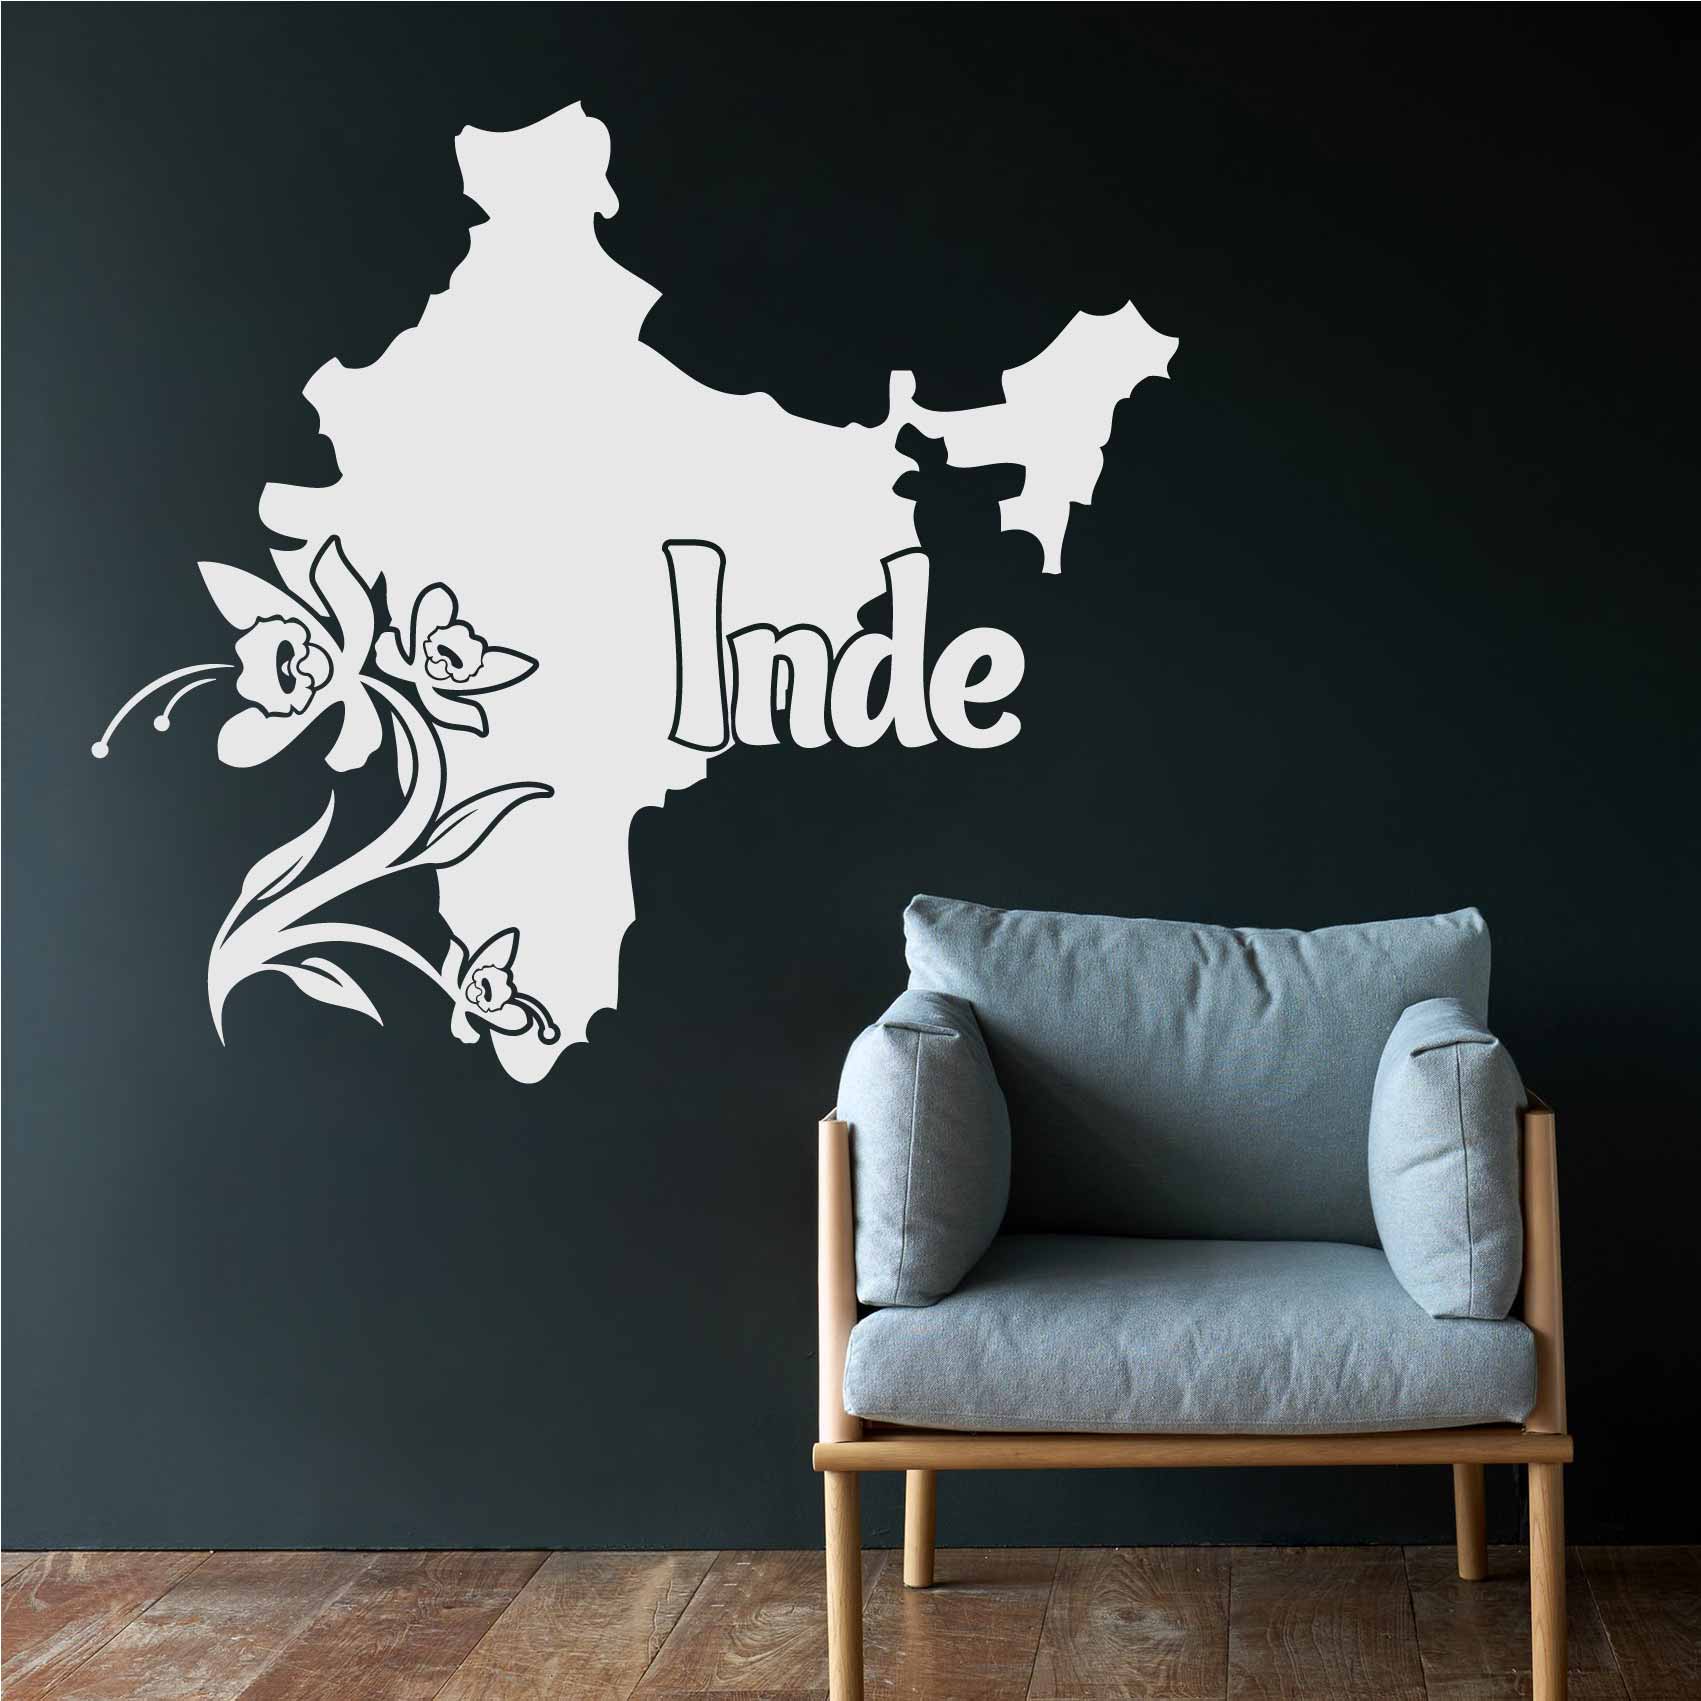 stickers-muraux-inde-ref3inde-stickers-muraux-inde-autocollant-deco-salon-chambre-zen-sticker-mural-inde-india